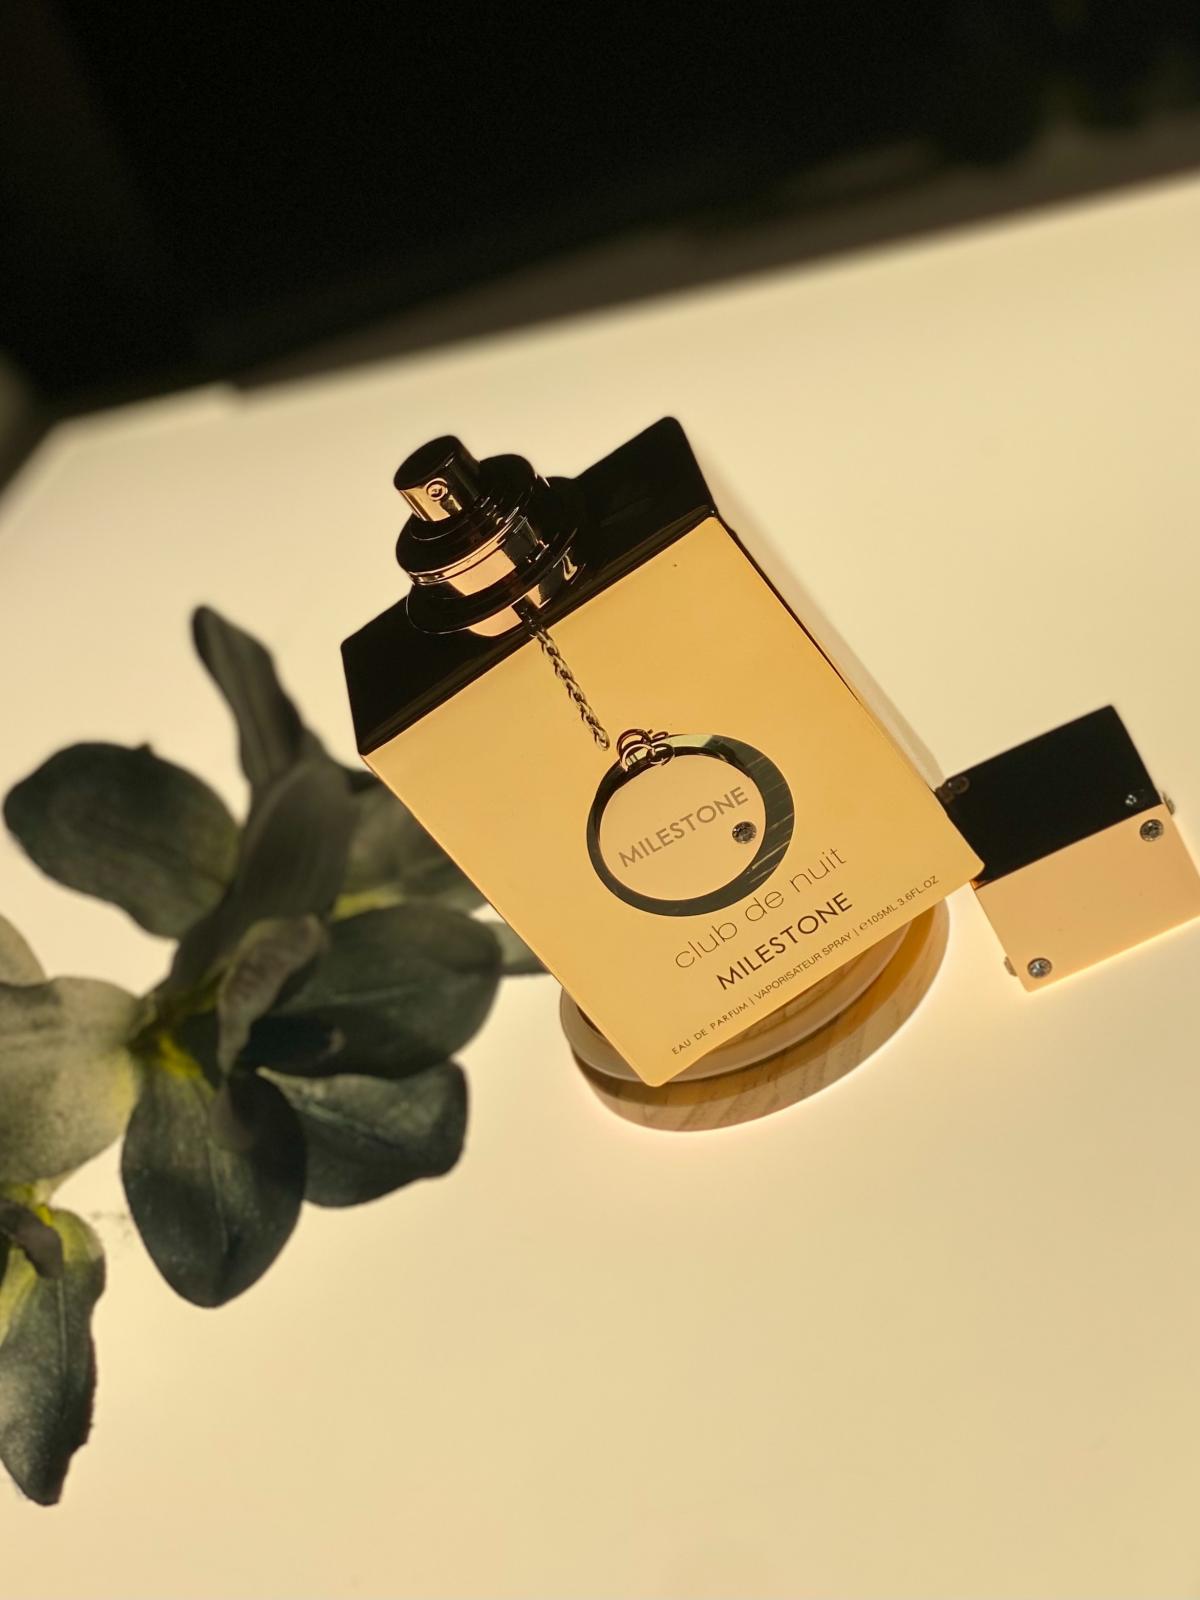 Club de Nuit Milestone Armaf perfume - a fragrance for women and men 2019